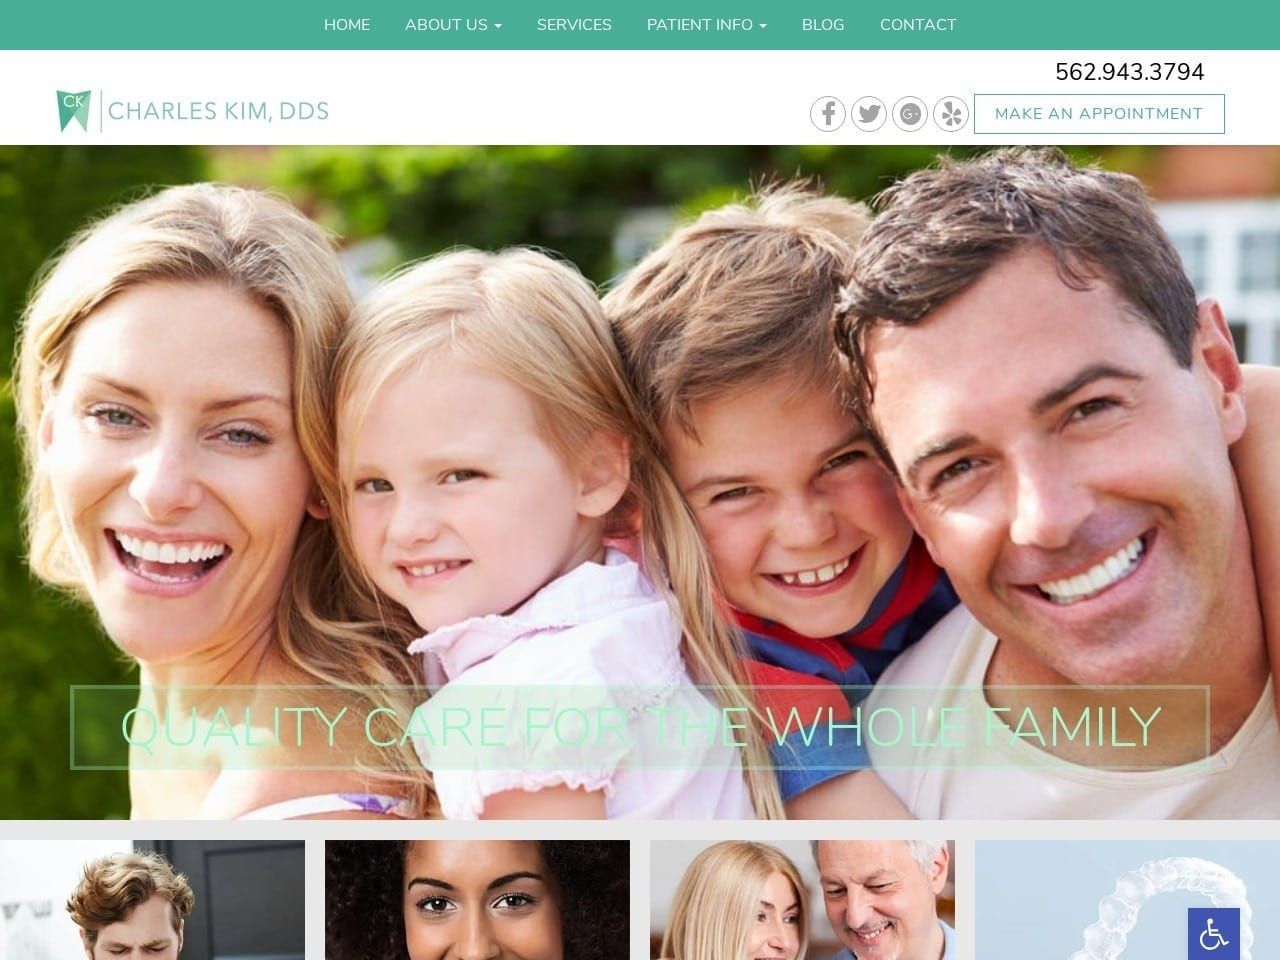 La Mirada Cosmetic Dentistry Website Screenshot From Url Ckdentalcare.com